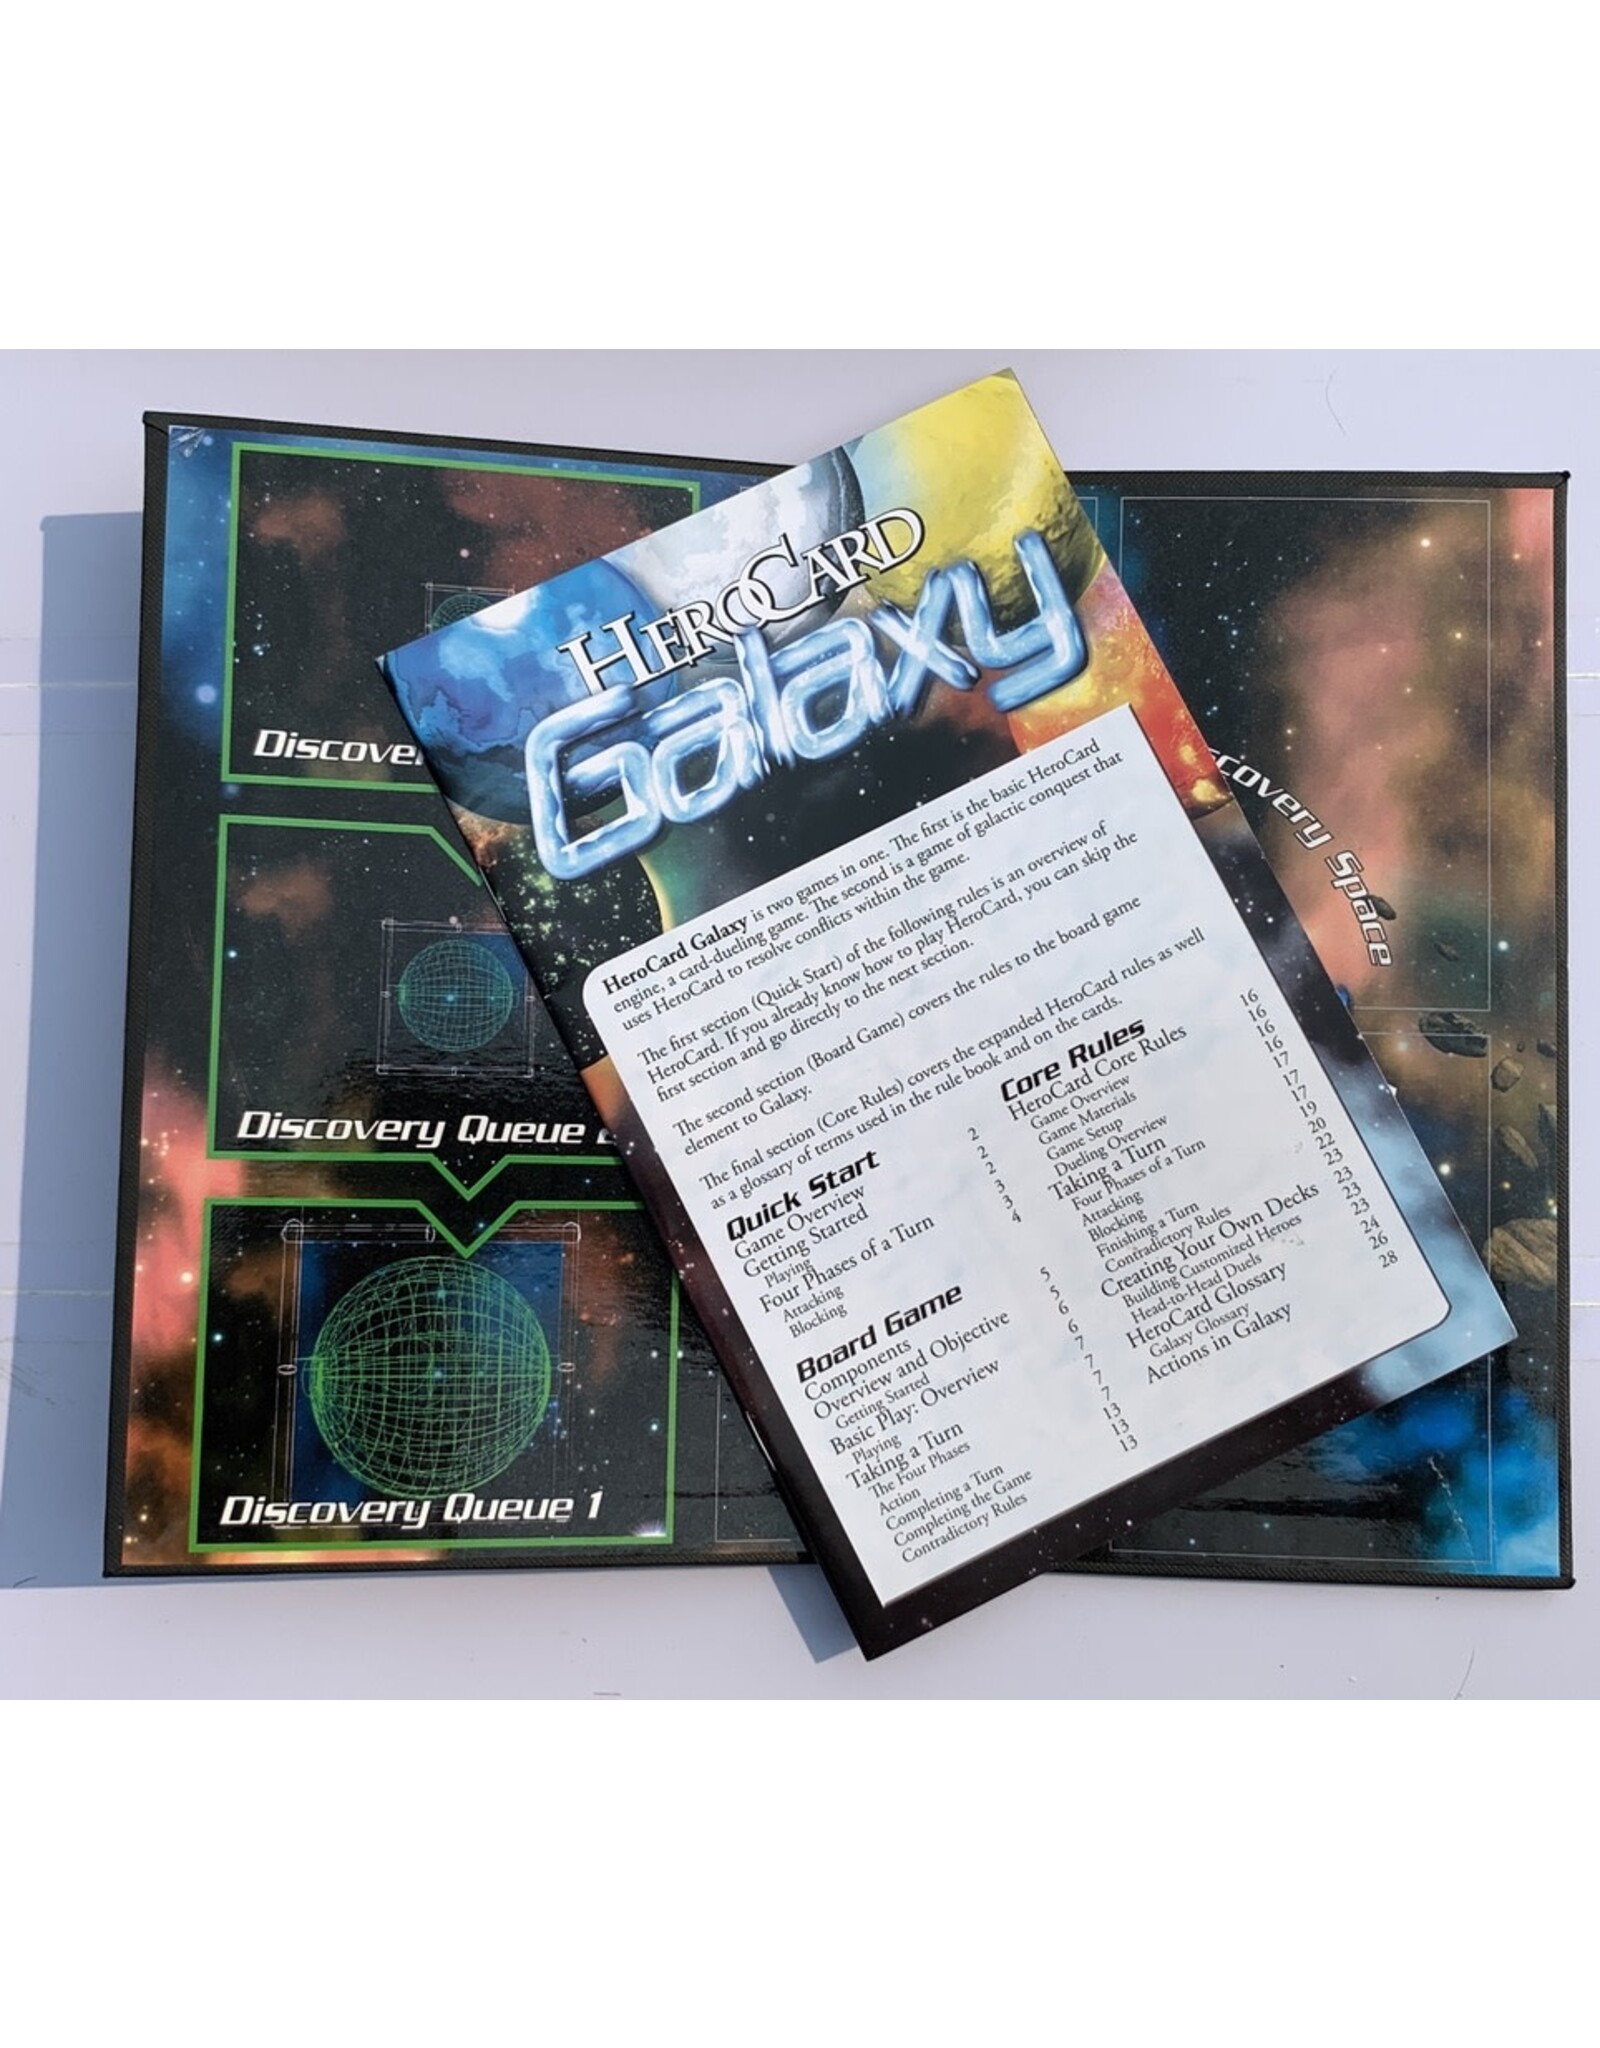 Table Star Games Herocard Galaxy (2006)